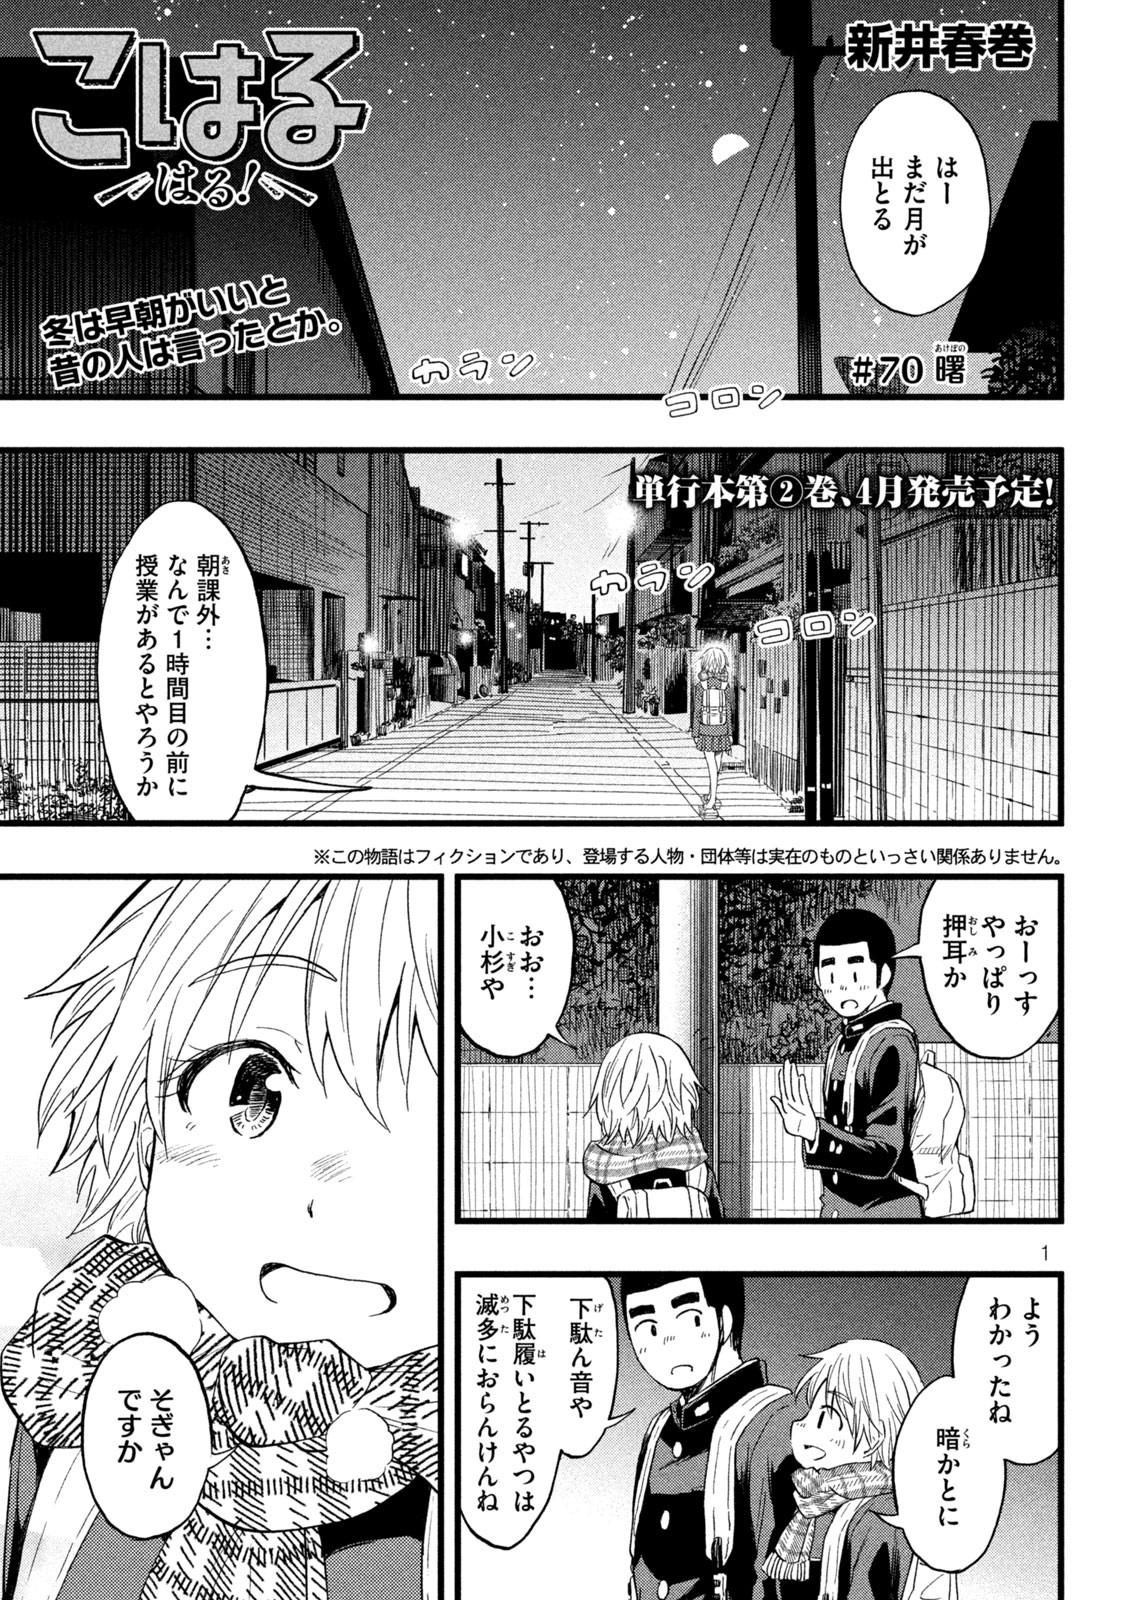 Koharu haru! - Chapter 70 - Page 1